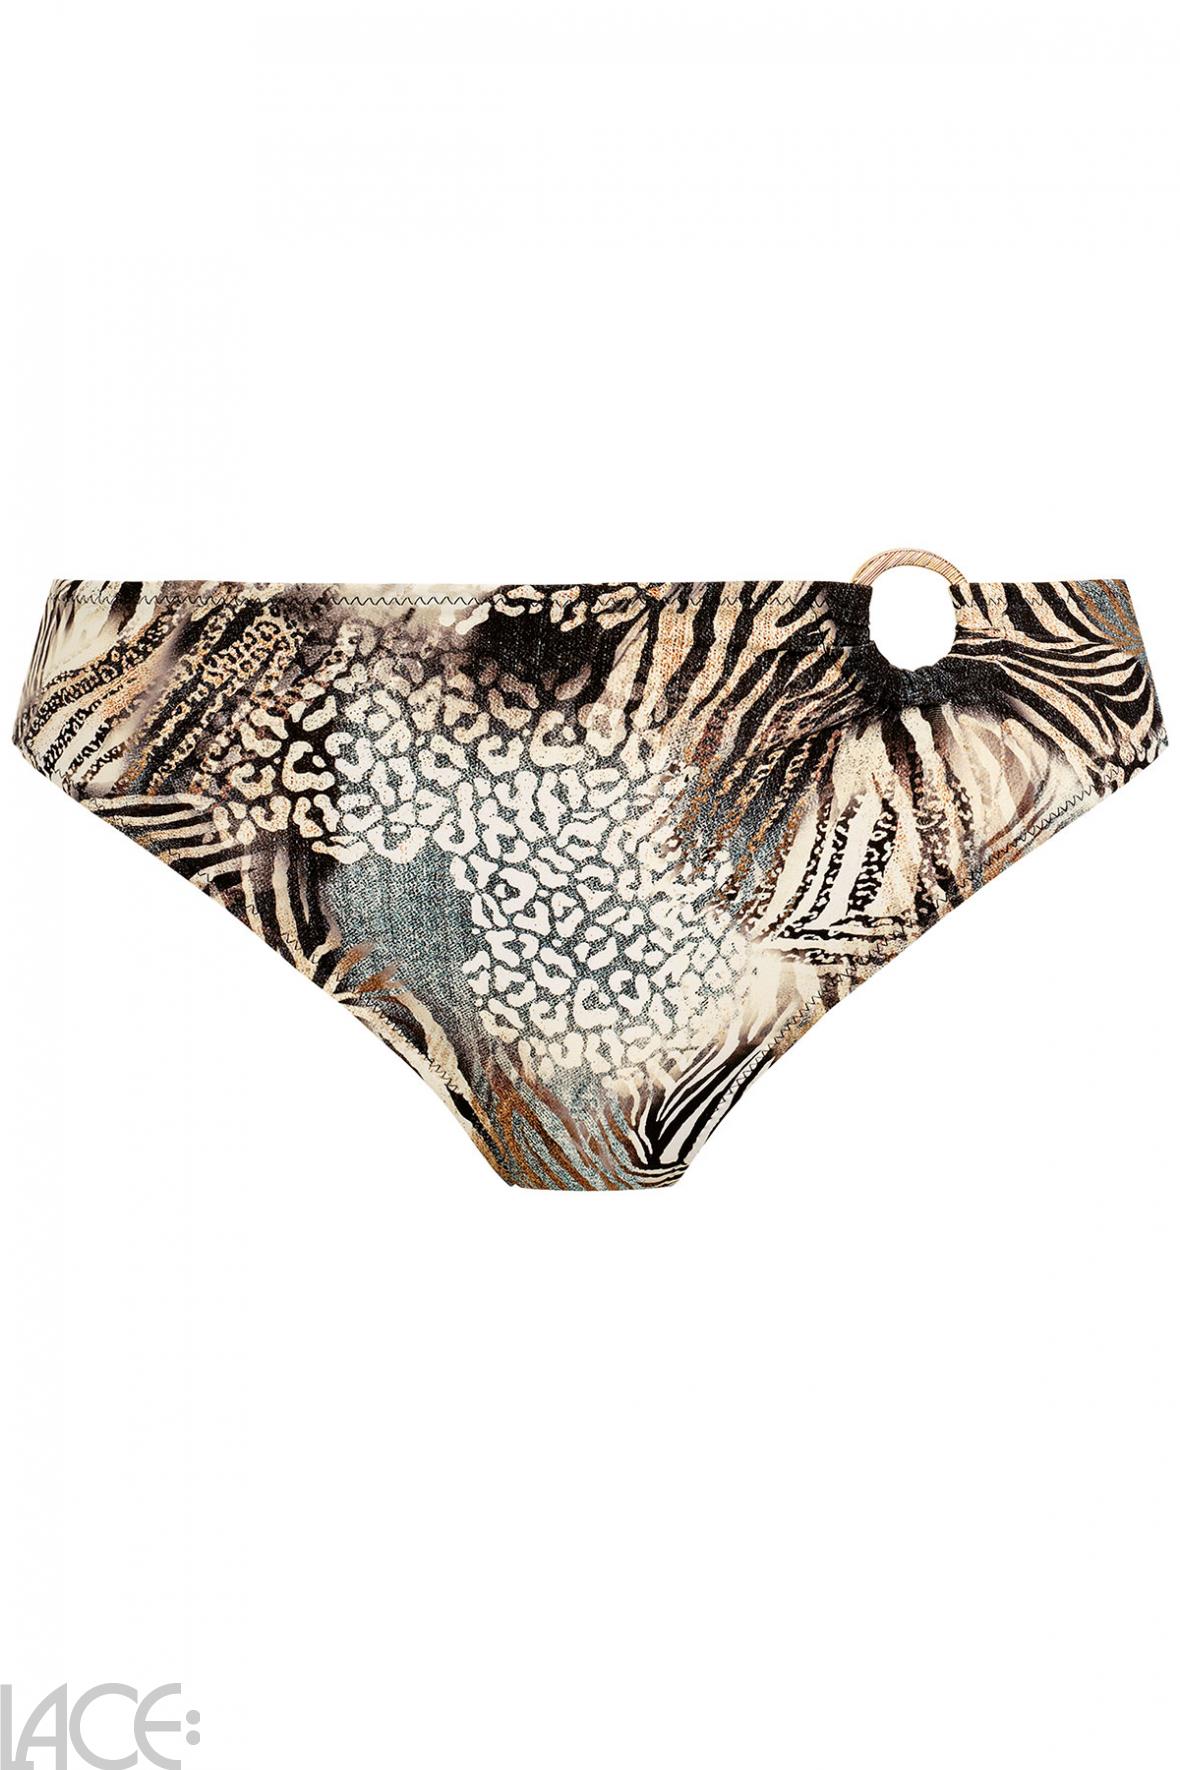 Fantasie Swim Seraya Sands Bikini Classic brief – Lace-Lingerie.com